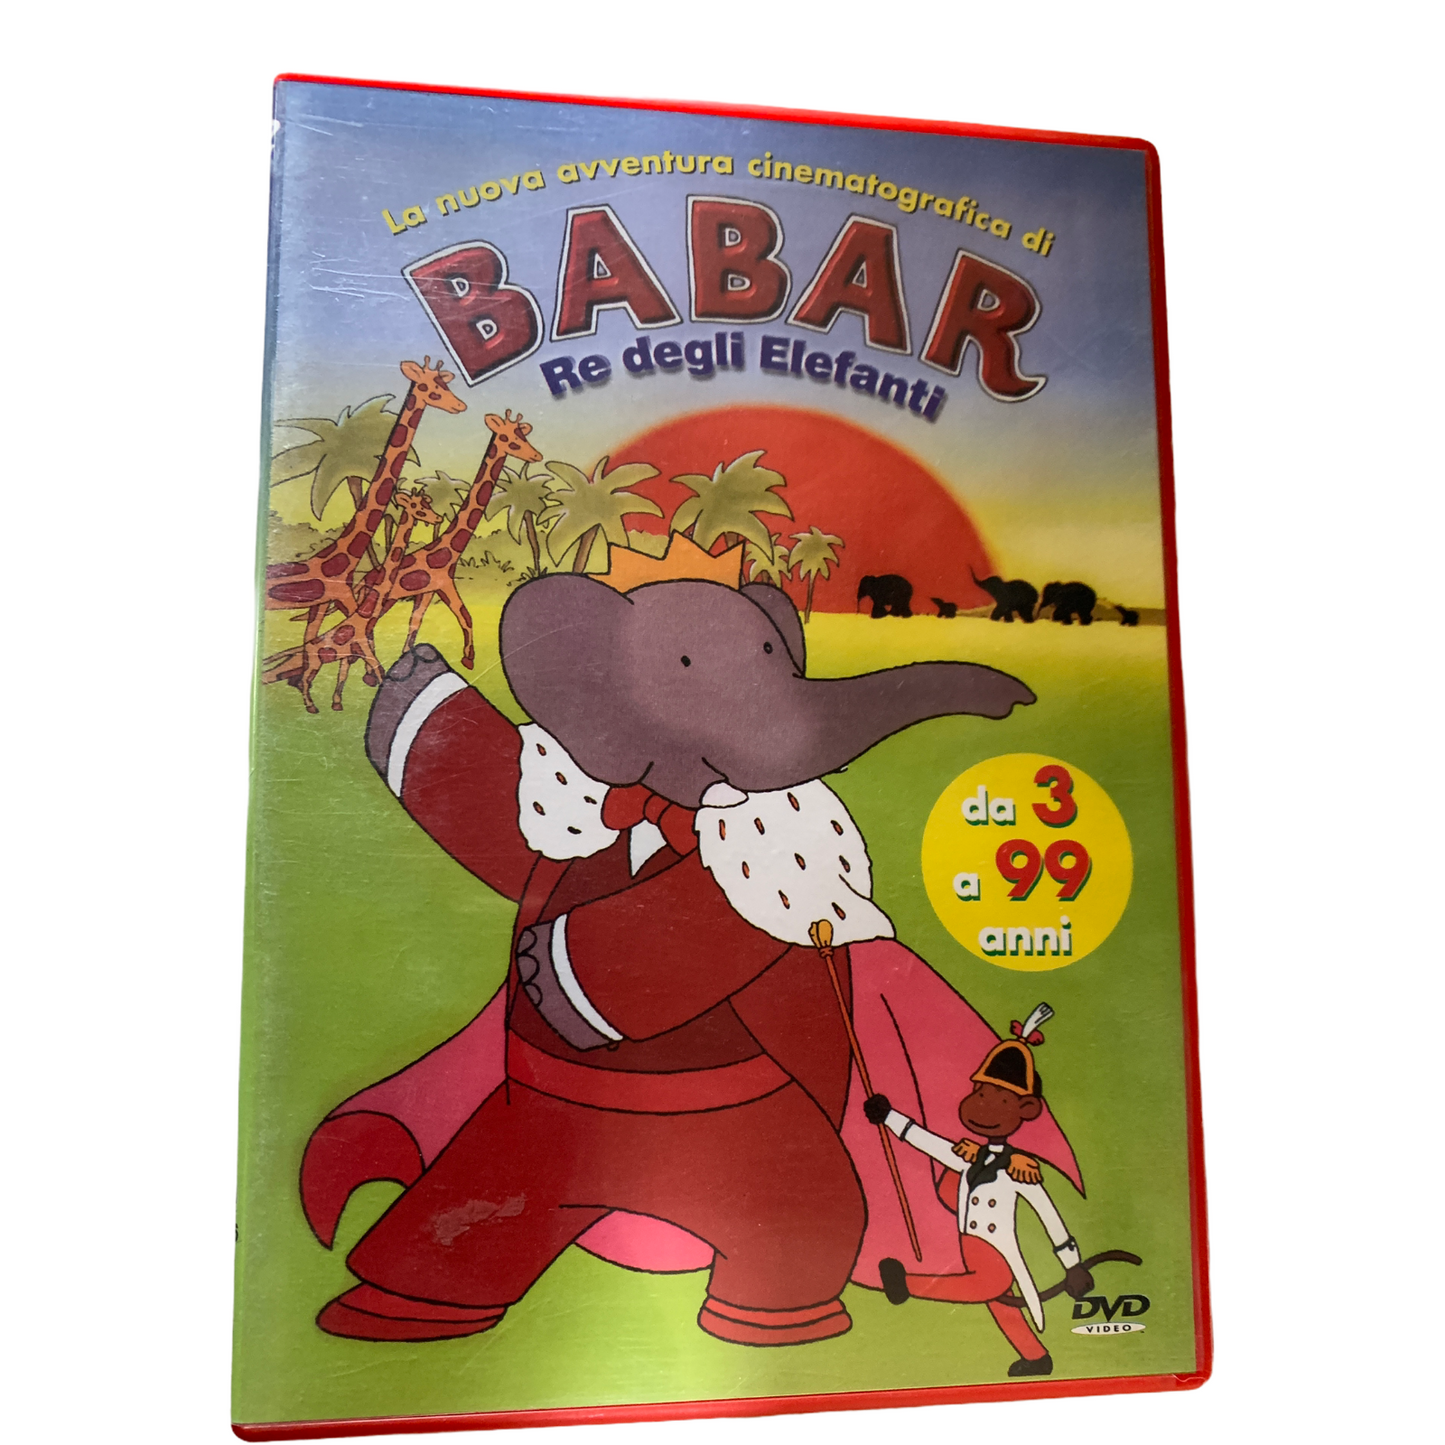 Dvd Babar re degli elefanti